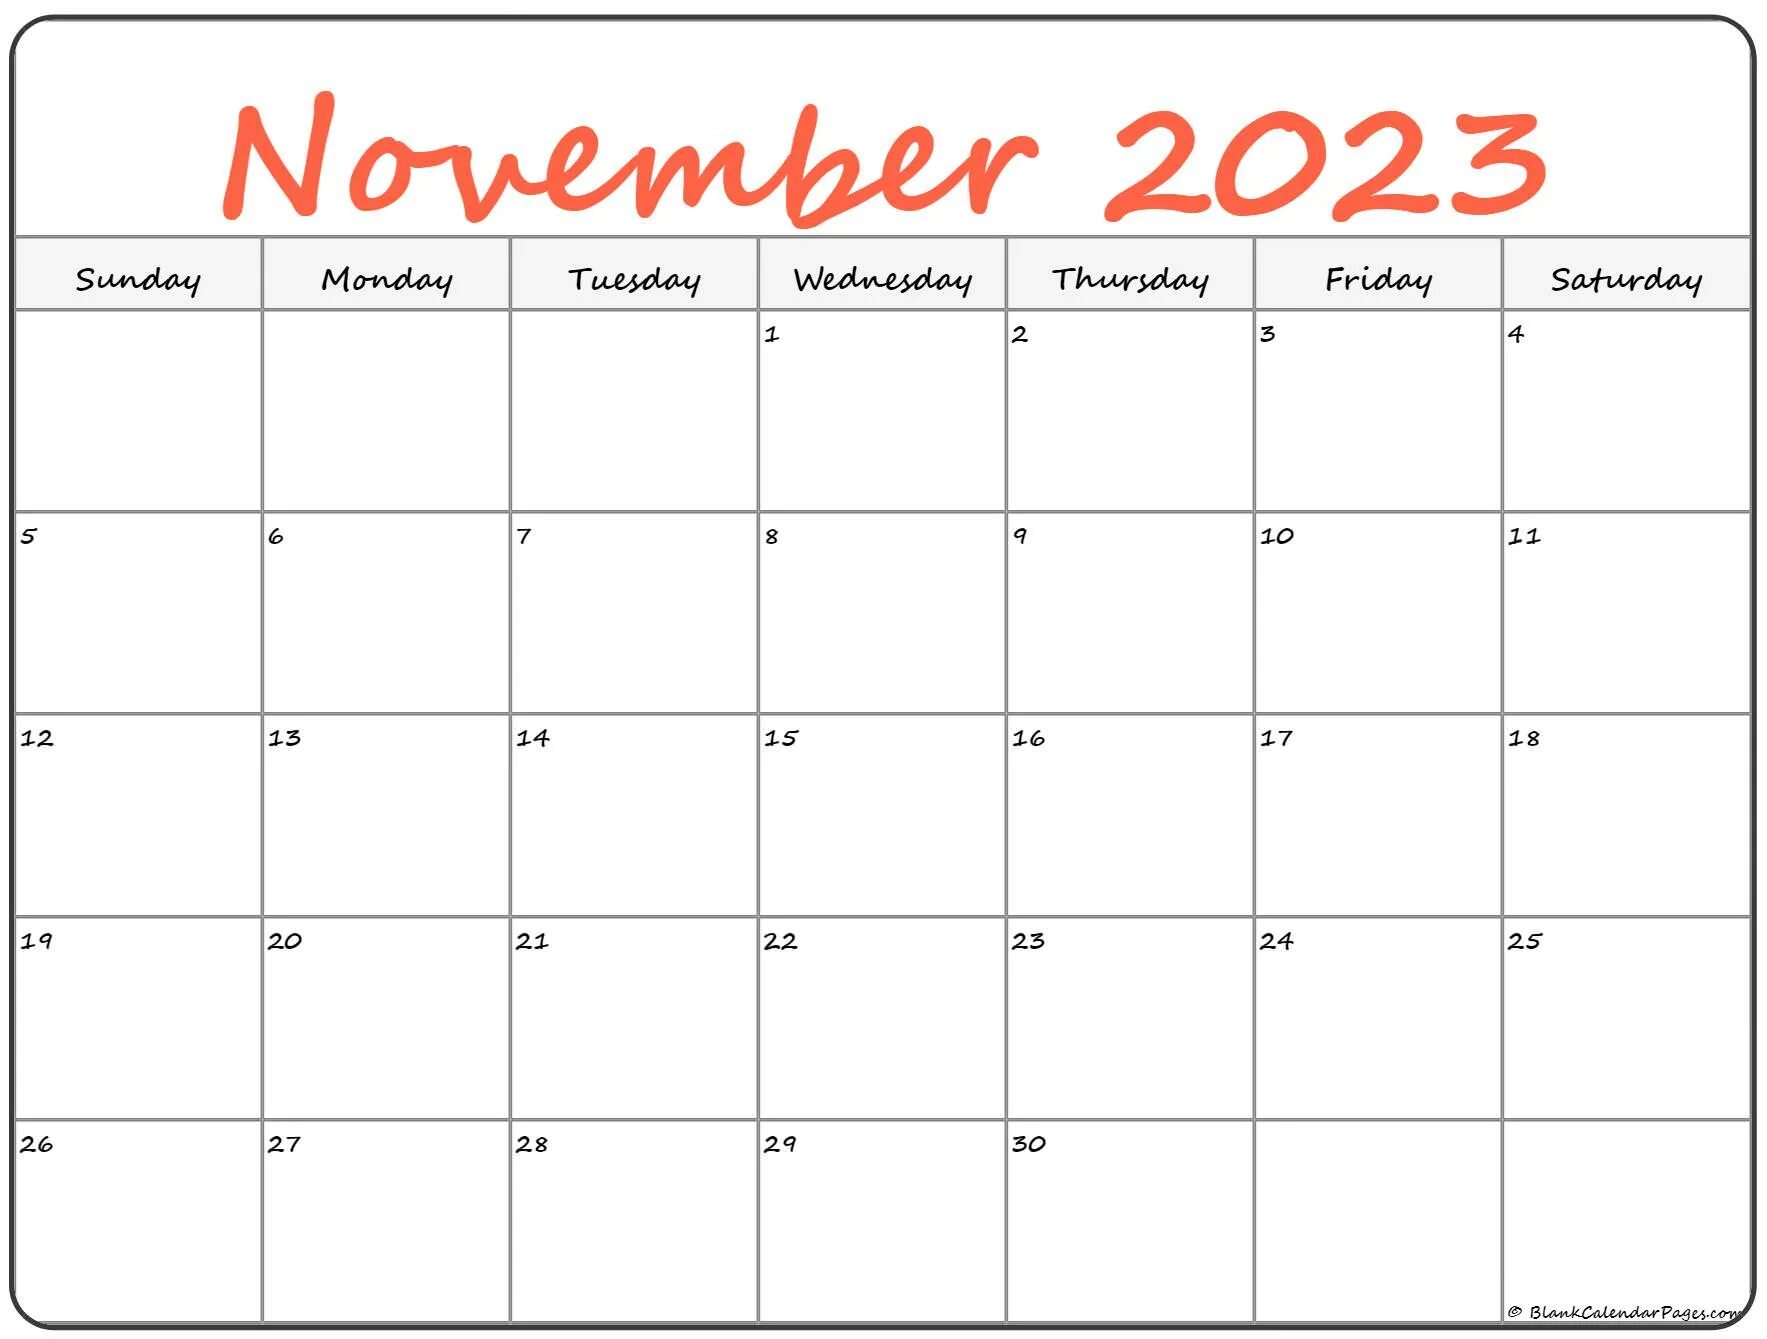 Игры месяца февраль 2024. March 2022. Календарь декабрь 2022. Календарь ноябрь 2022. Календарь на март 2022 года.